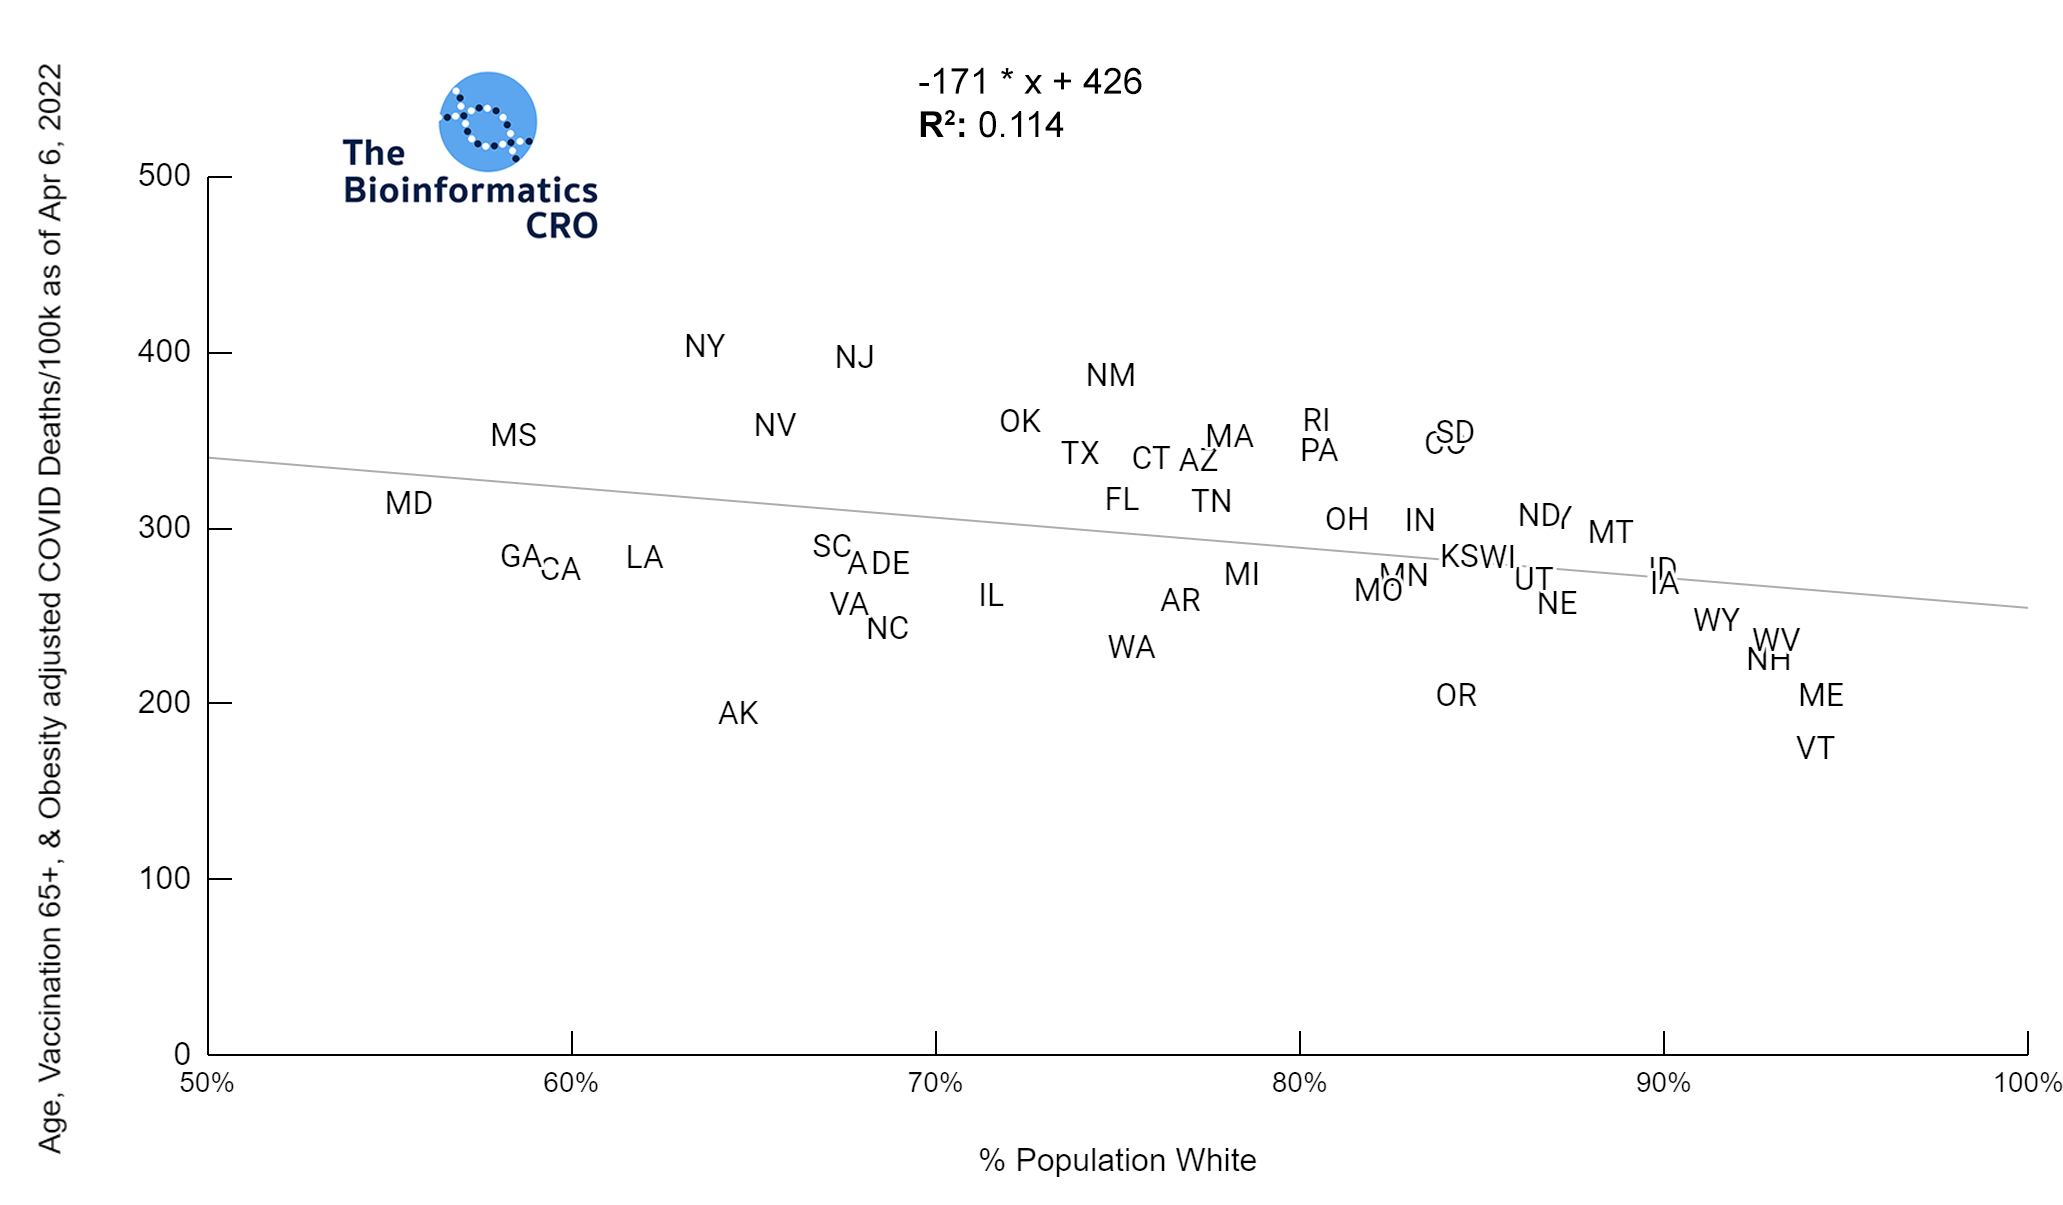 Percent Population White versus Age-adjusted deaths | y = -171 * x + 426 | R^2 = 0.114